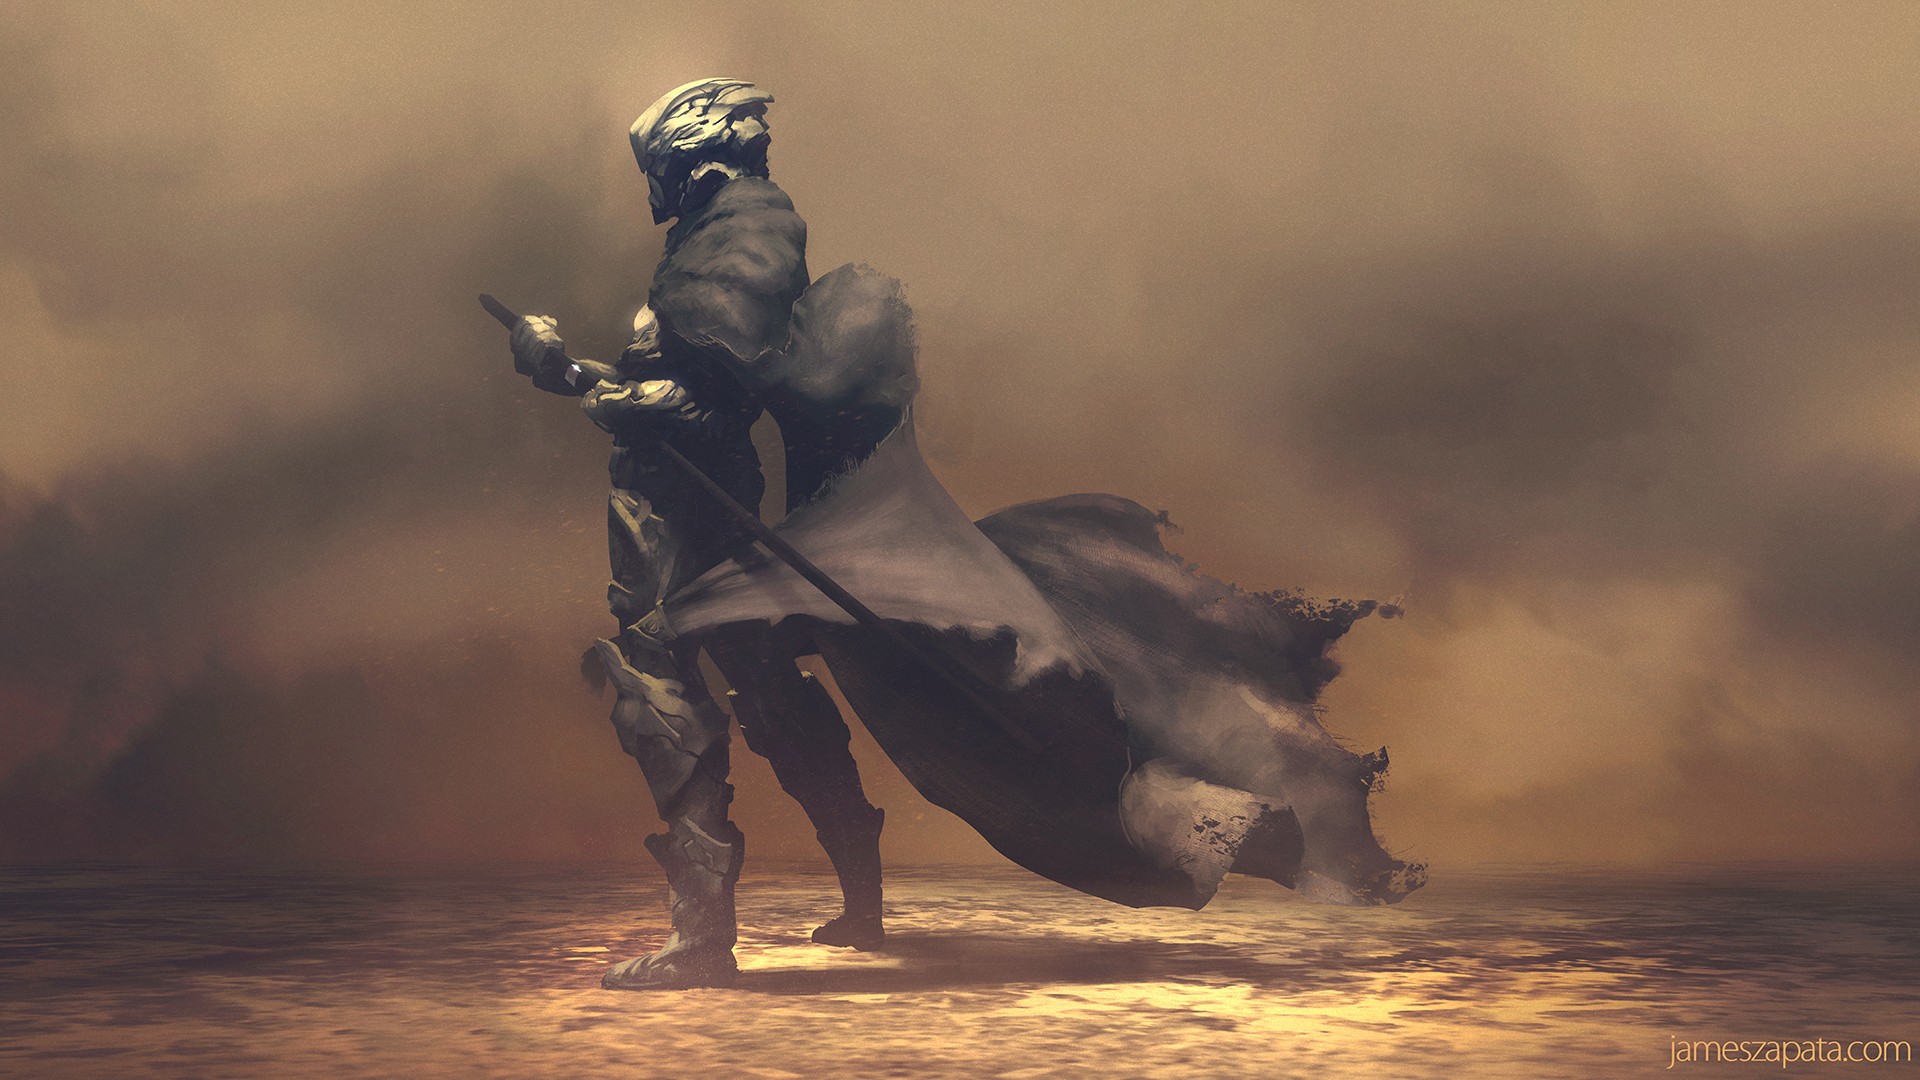 General 1920x1080 warrior armor artwork digital art futuristic samurai sword dark brown dust fantasy art